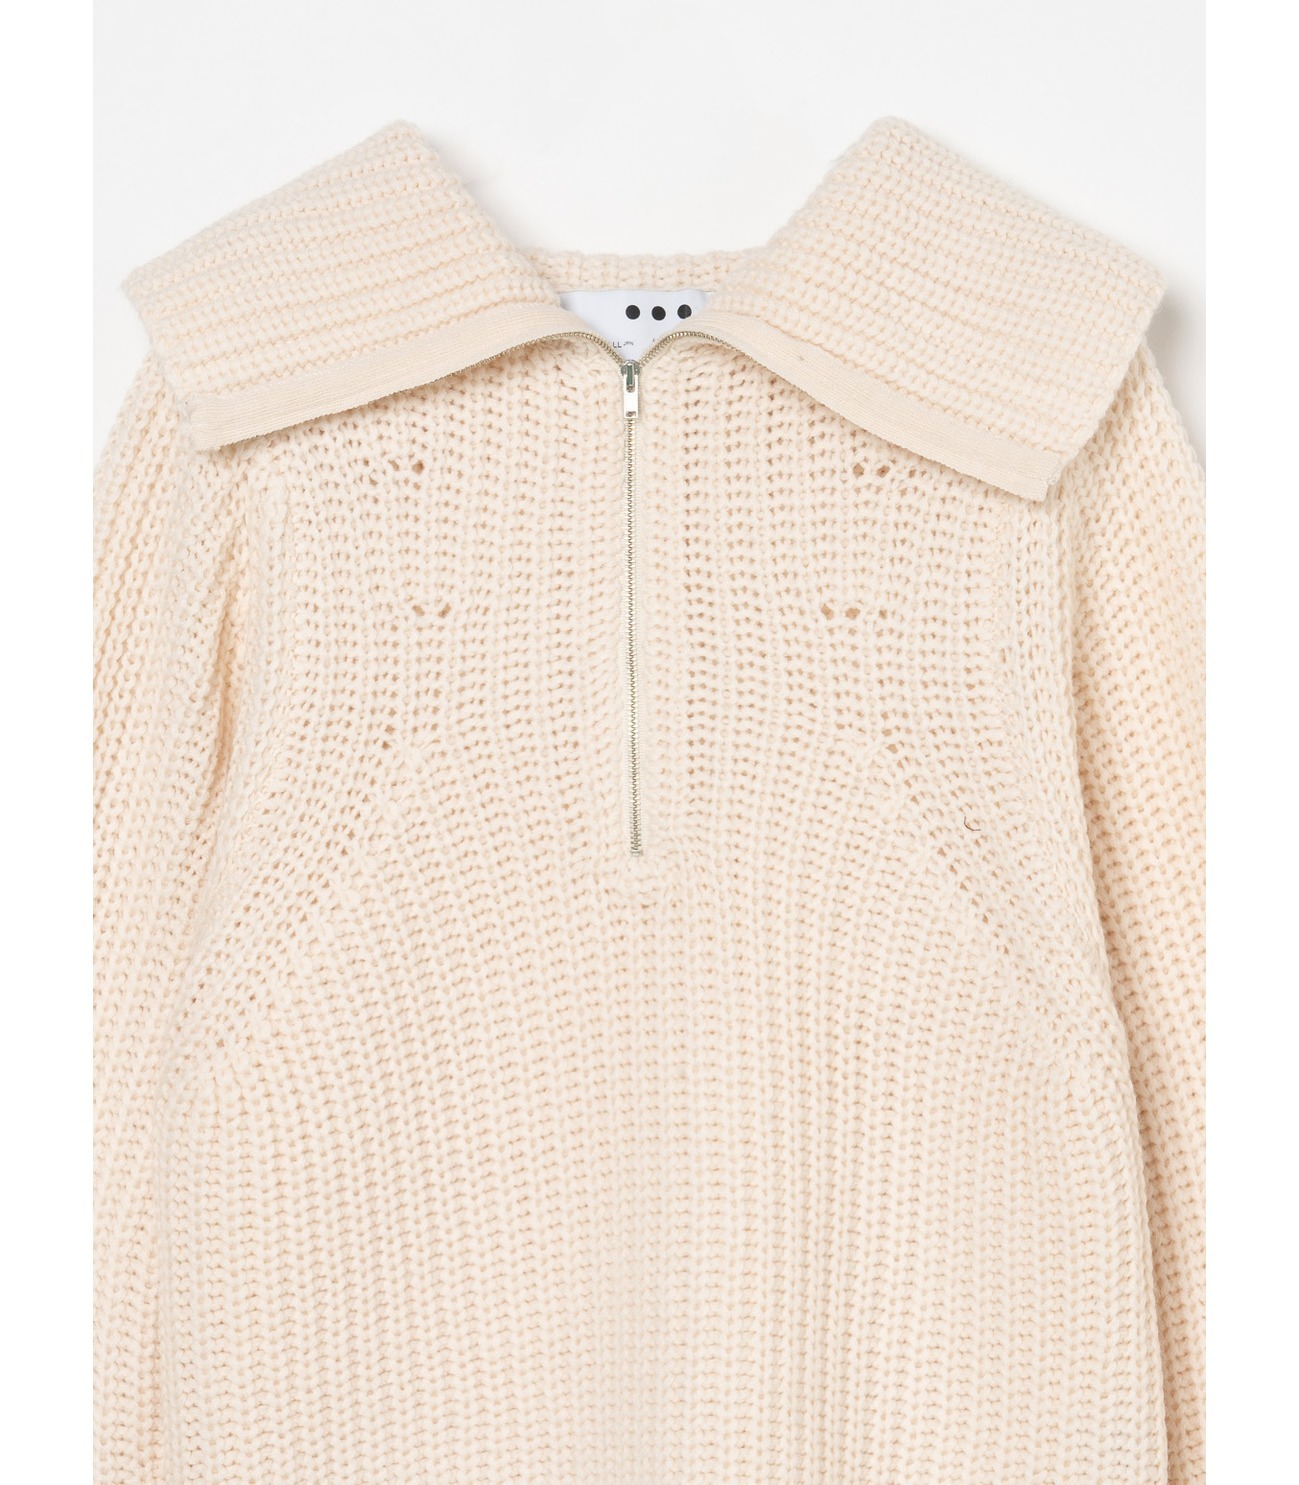 Bulky sweater l/s half zip po 詳細画像 off white 2